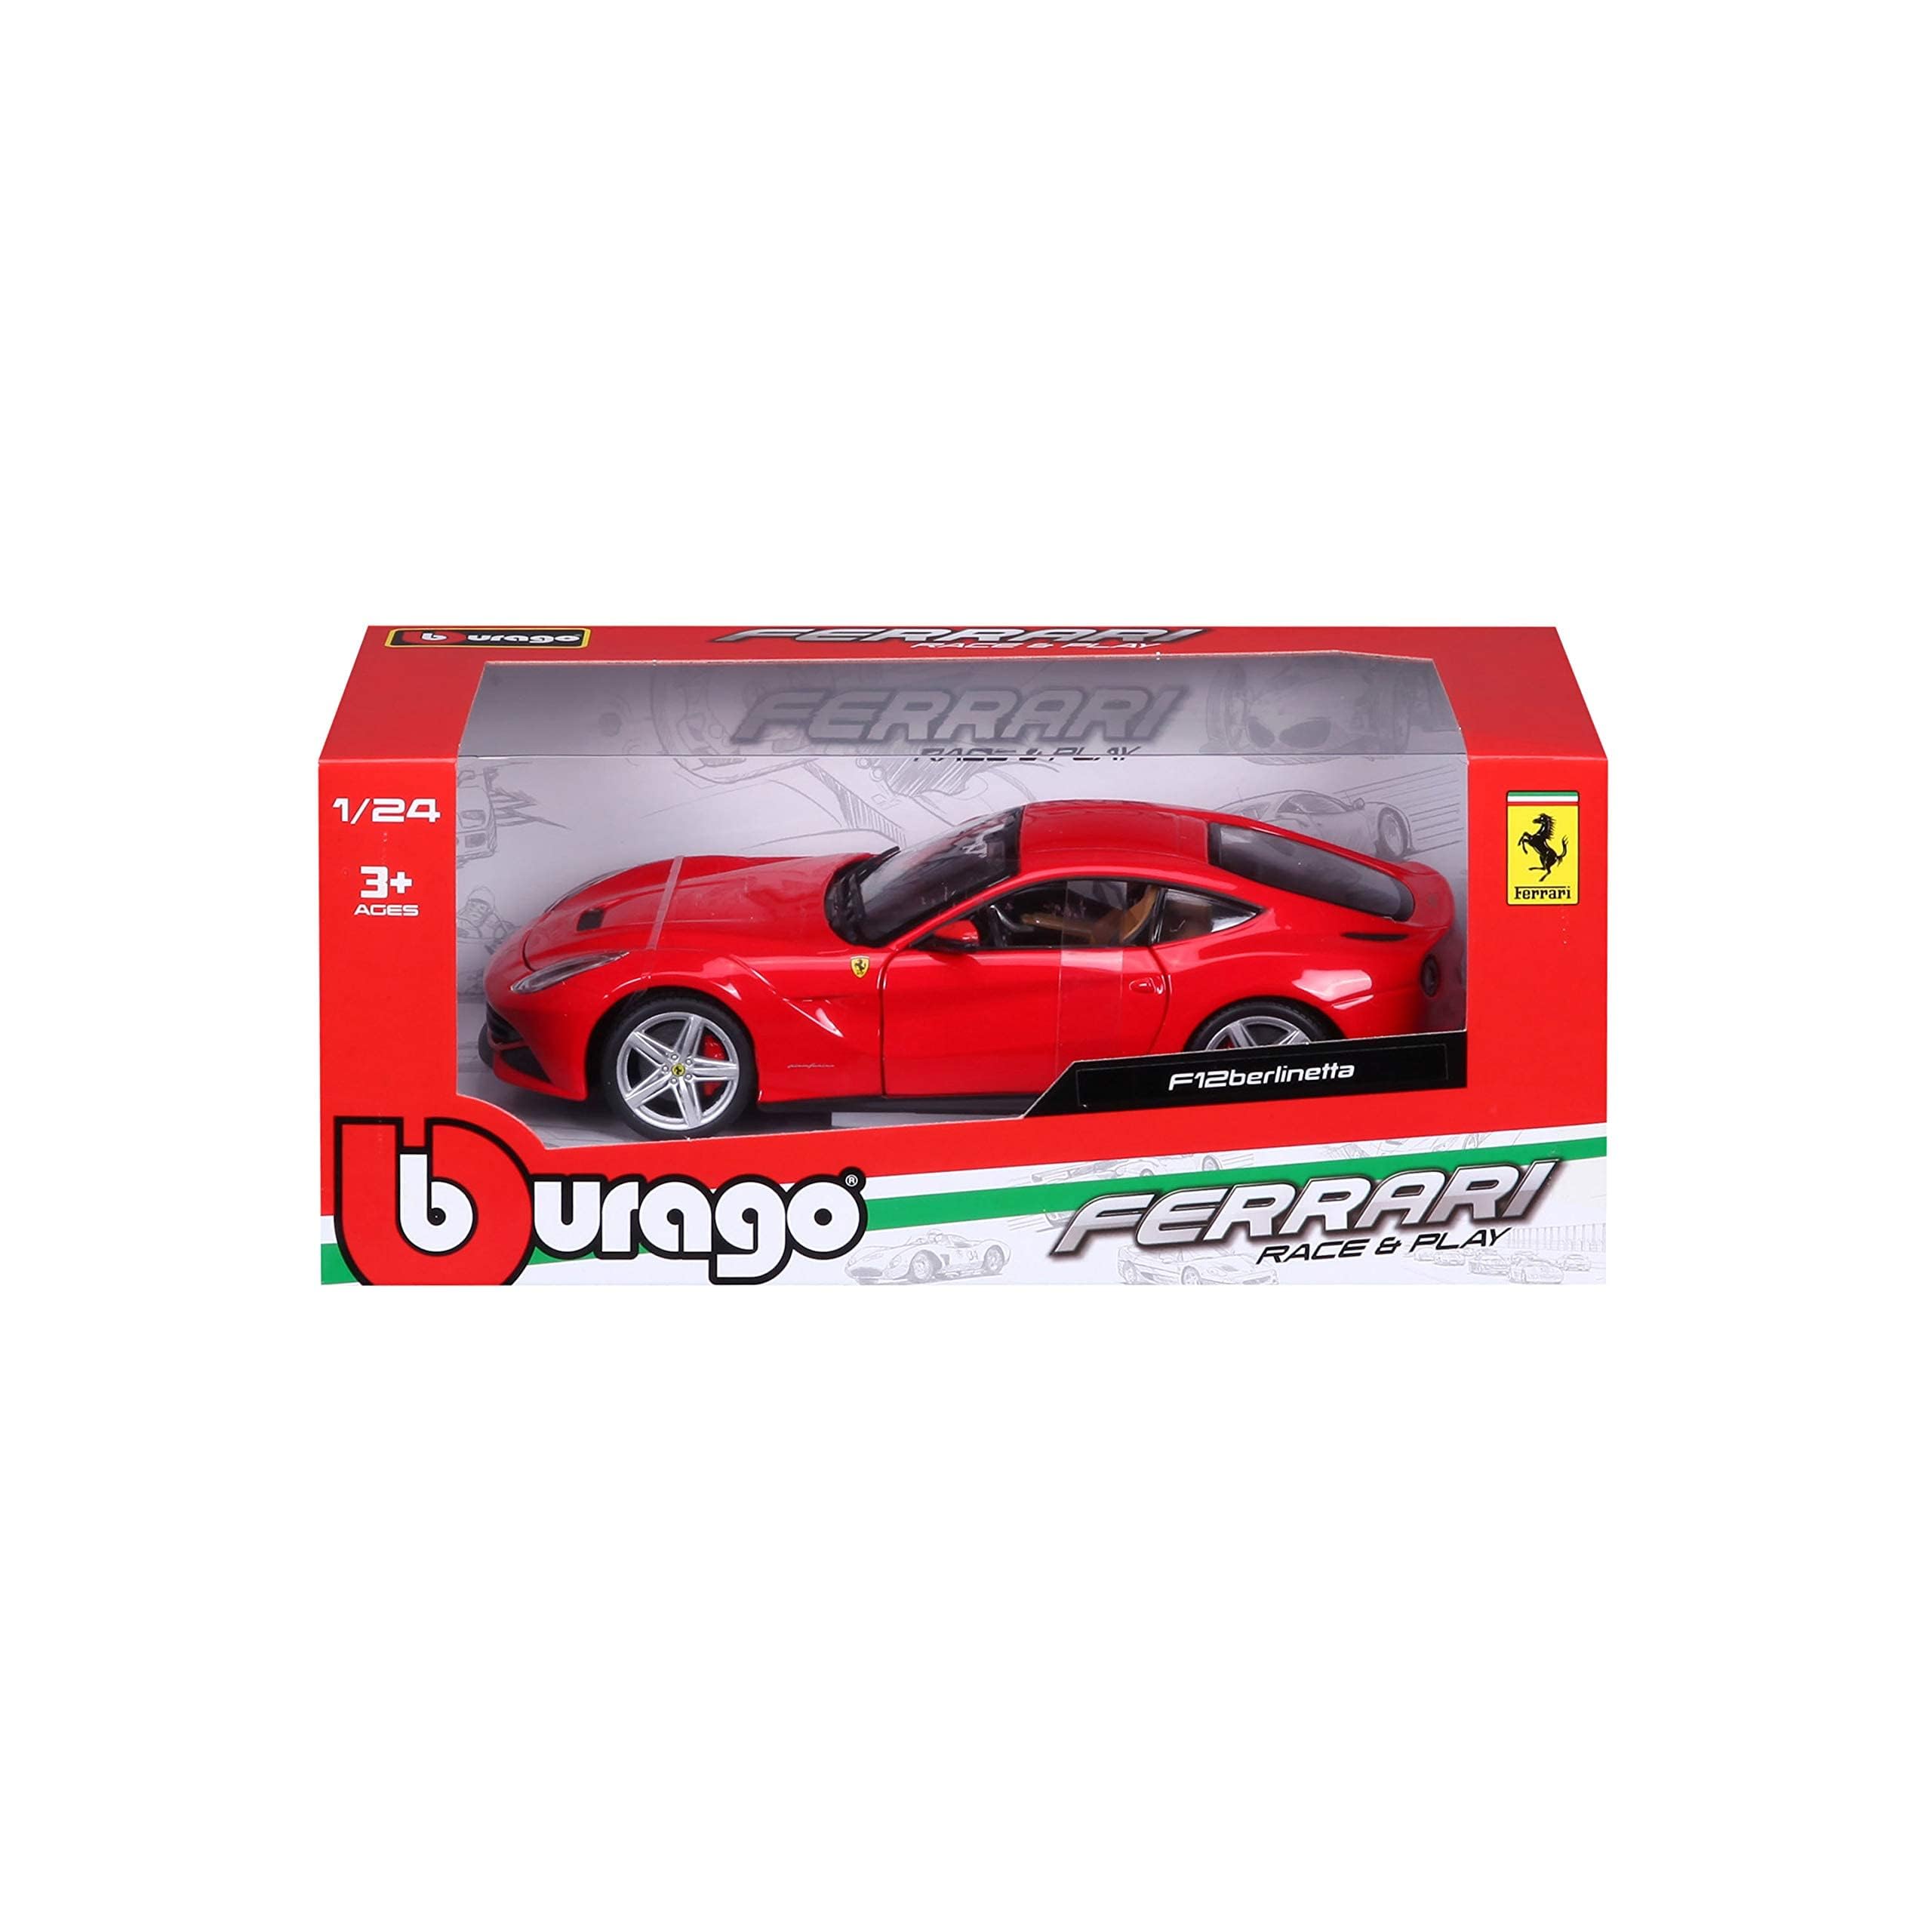 BBurago Maisto France - 26007 - Véhicule miniature - Ferrari F12 Berlinetta - Échelle 1/24 - Couleur aléatoire